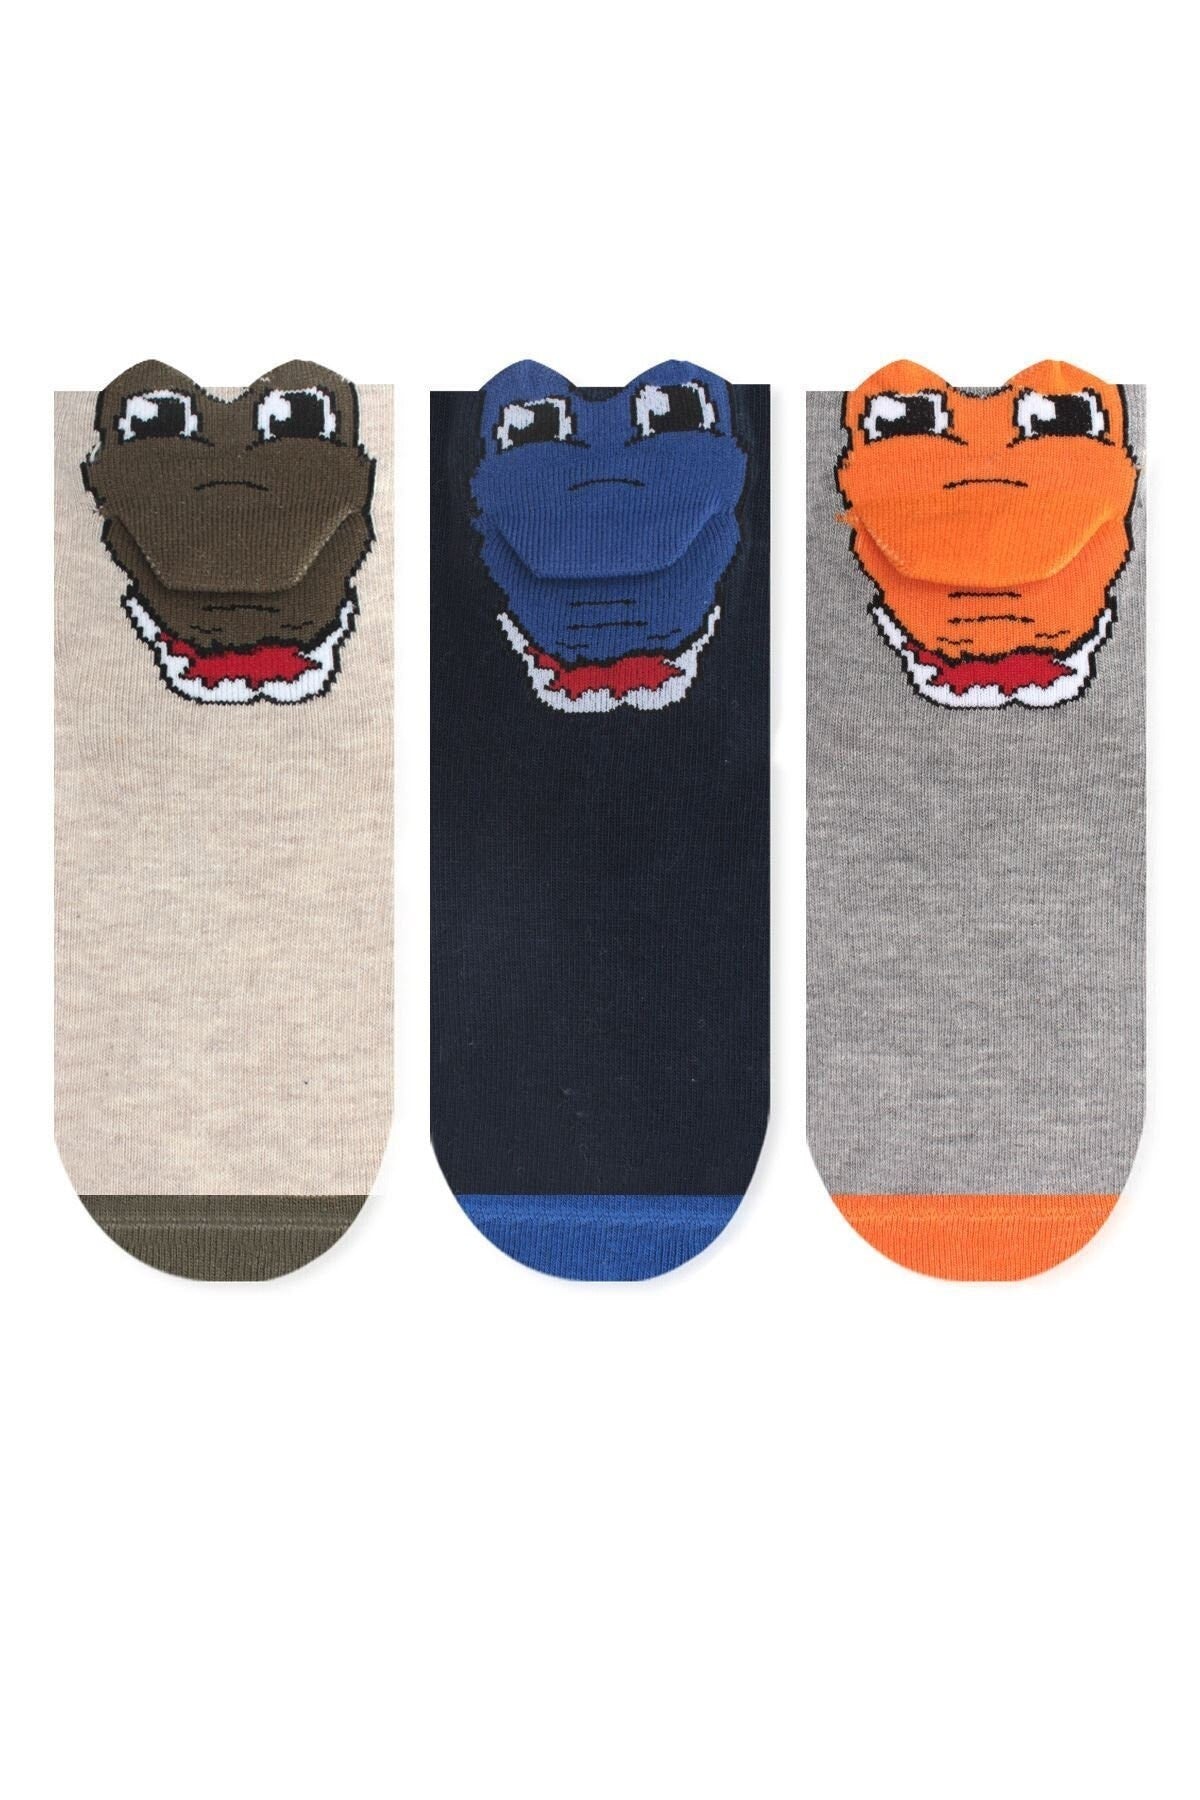 3D Crocodile Socks, Alligator Socks, Silly Youth Socks, Ages For 9-11 Years Old, US Size 4-8, EU 34-38, Cayman Sock, Advent Calendar Fillers